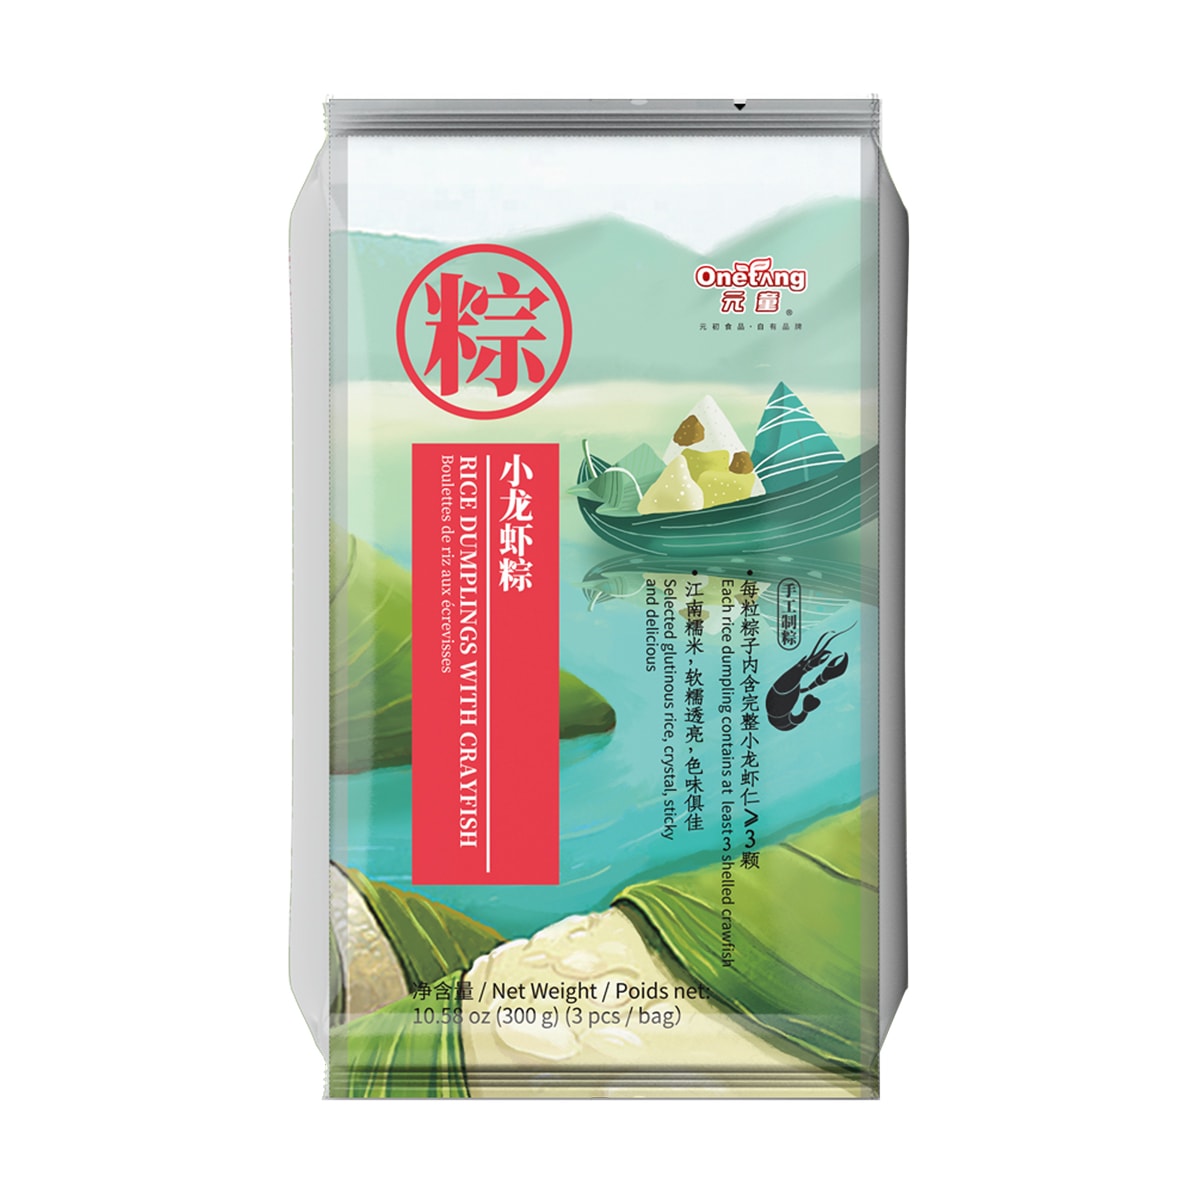 Yamibuy.com:Customer reviews:ONETANG Rice Dumplings with Crayfish 3pc 300g 